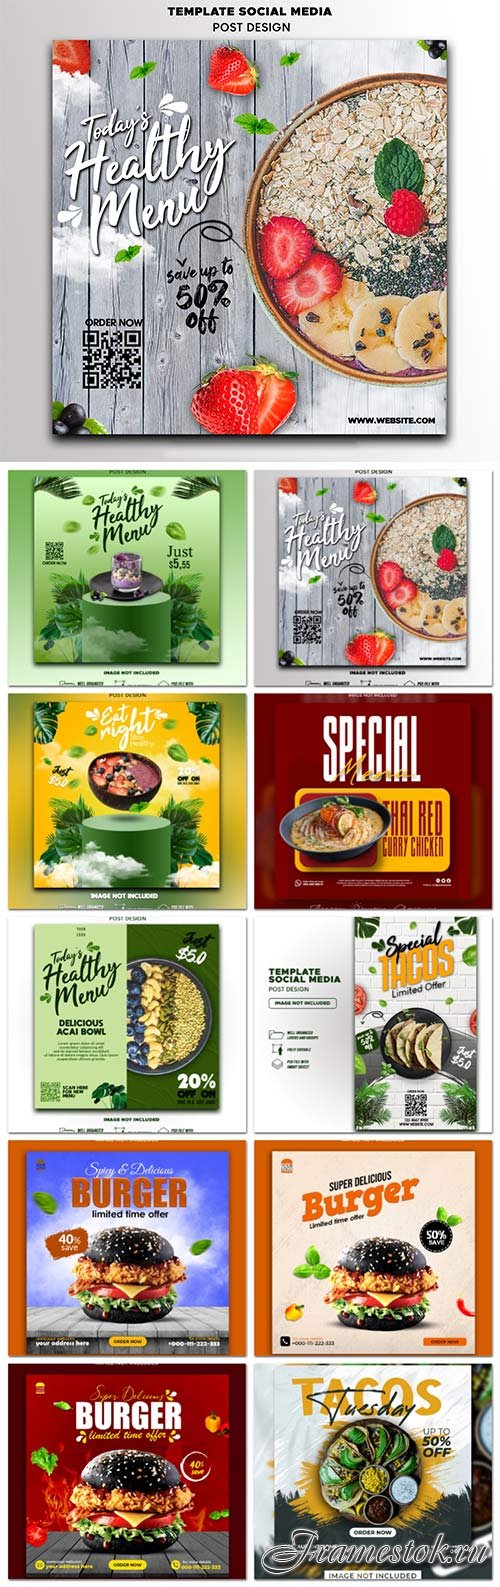 Food social media promotion psd flyer template vol 5